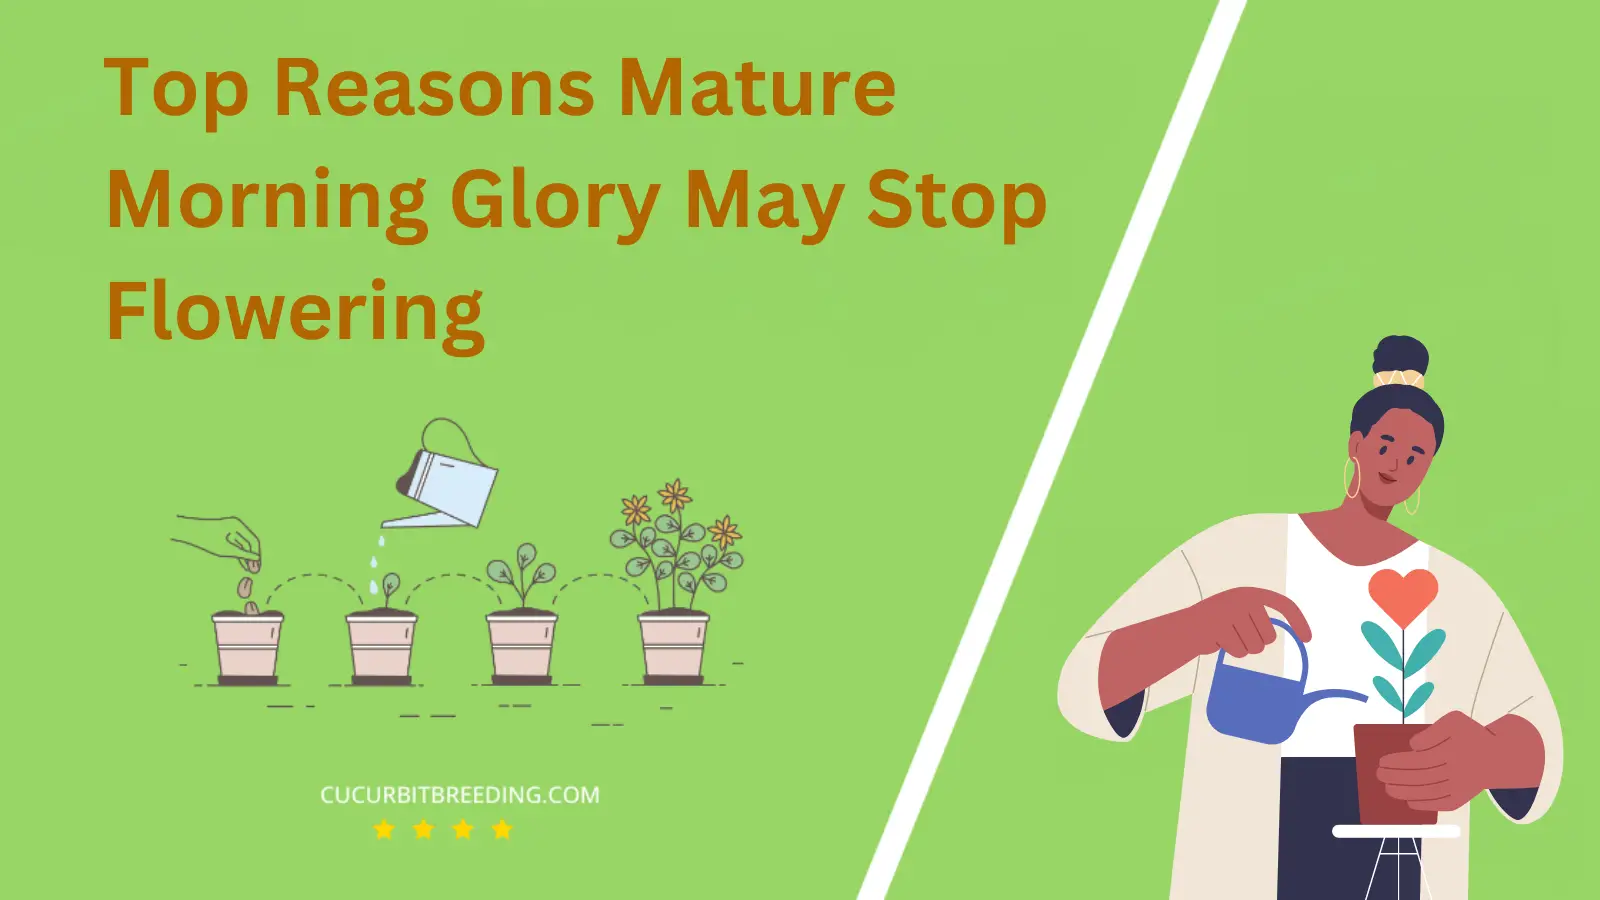 Top Reasons Mature Morning Glory May Stop Flowering